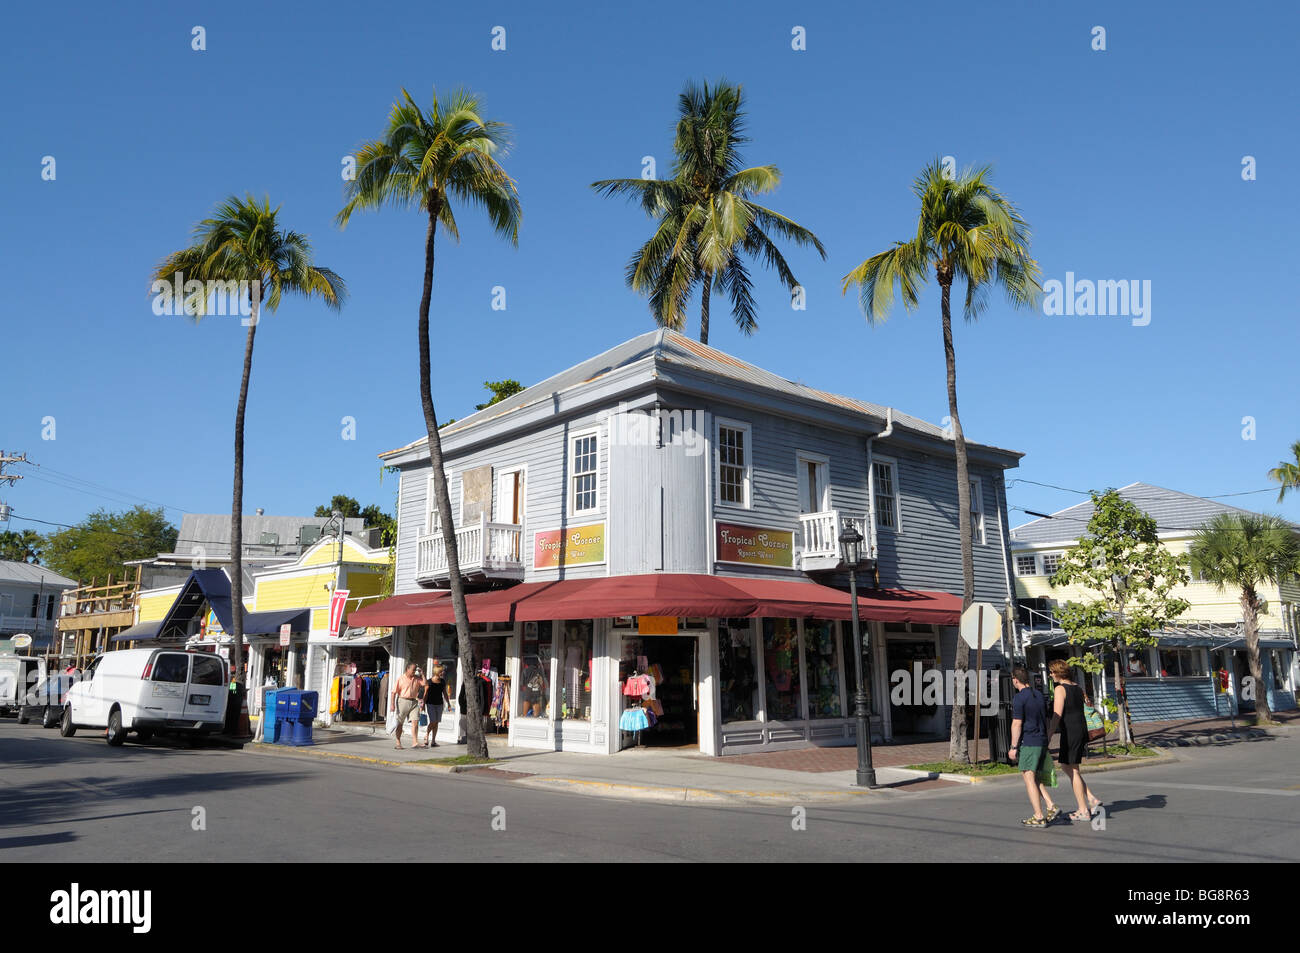 Street Scenery in Key West, Florida USA Stock Photo